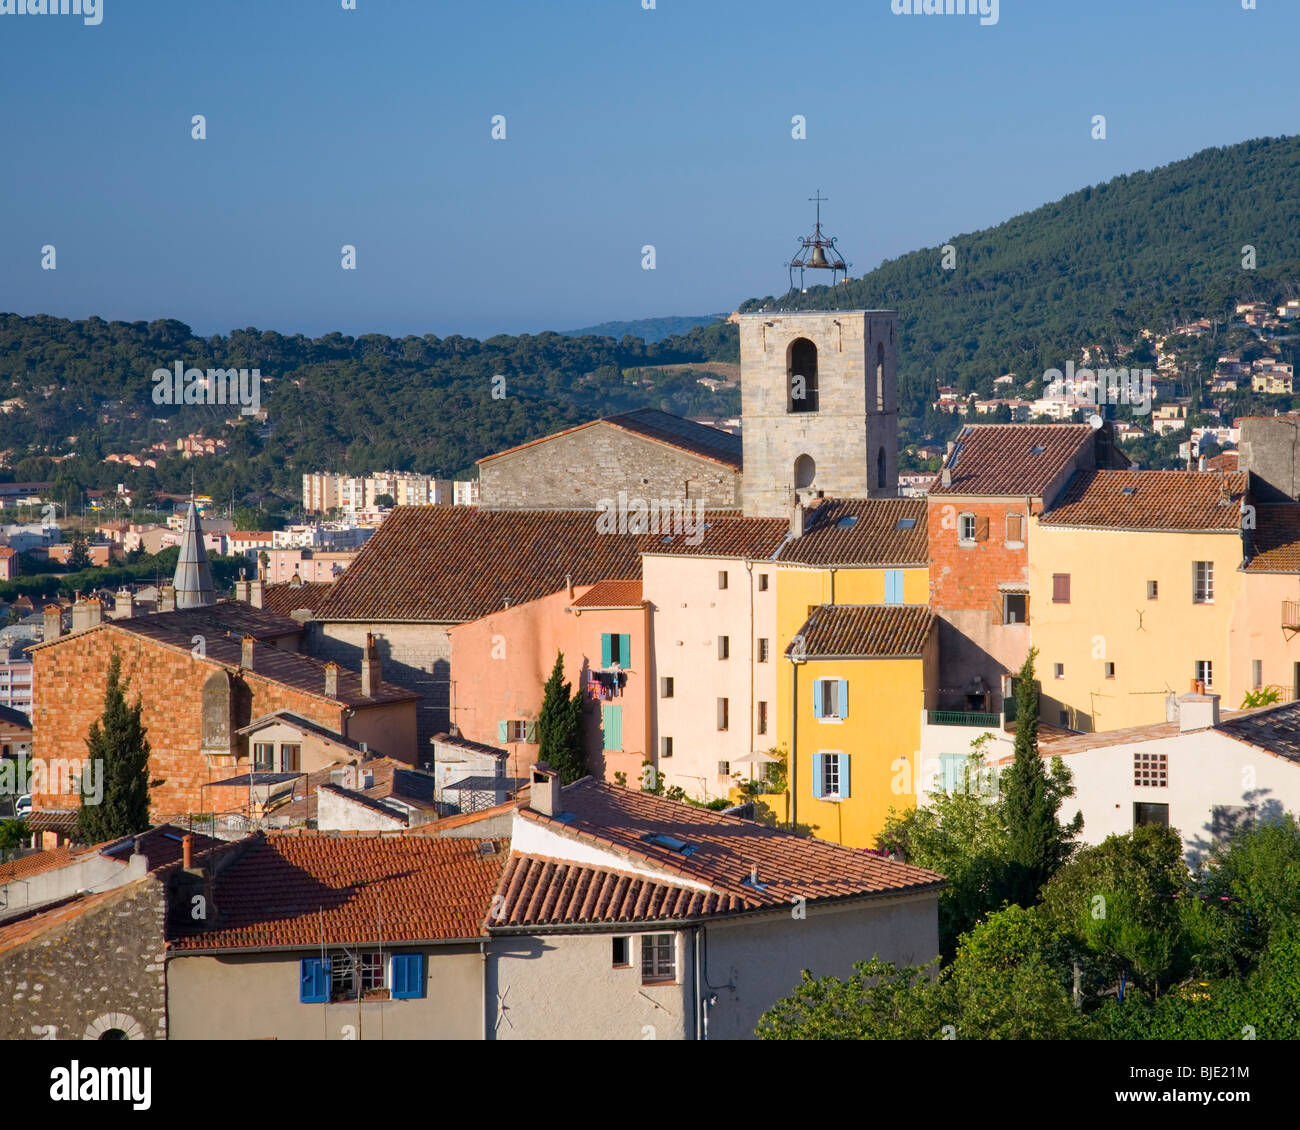 Hyères, Provence, Frankreich. Blick über die alten Dächer der Stadt von Parc St-Bernard, Turm des Collégiale St-Paul Prominente. Stockfoto